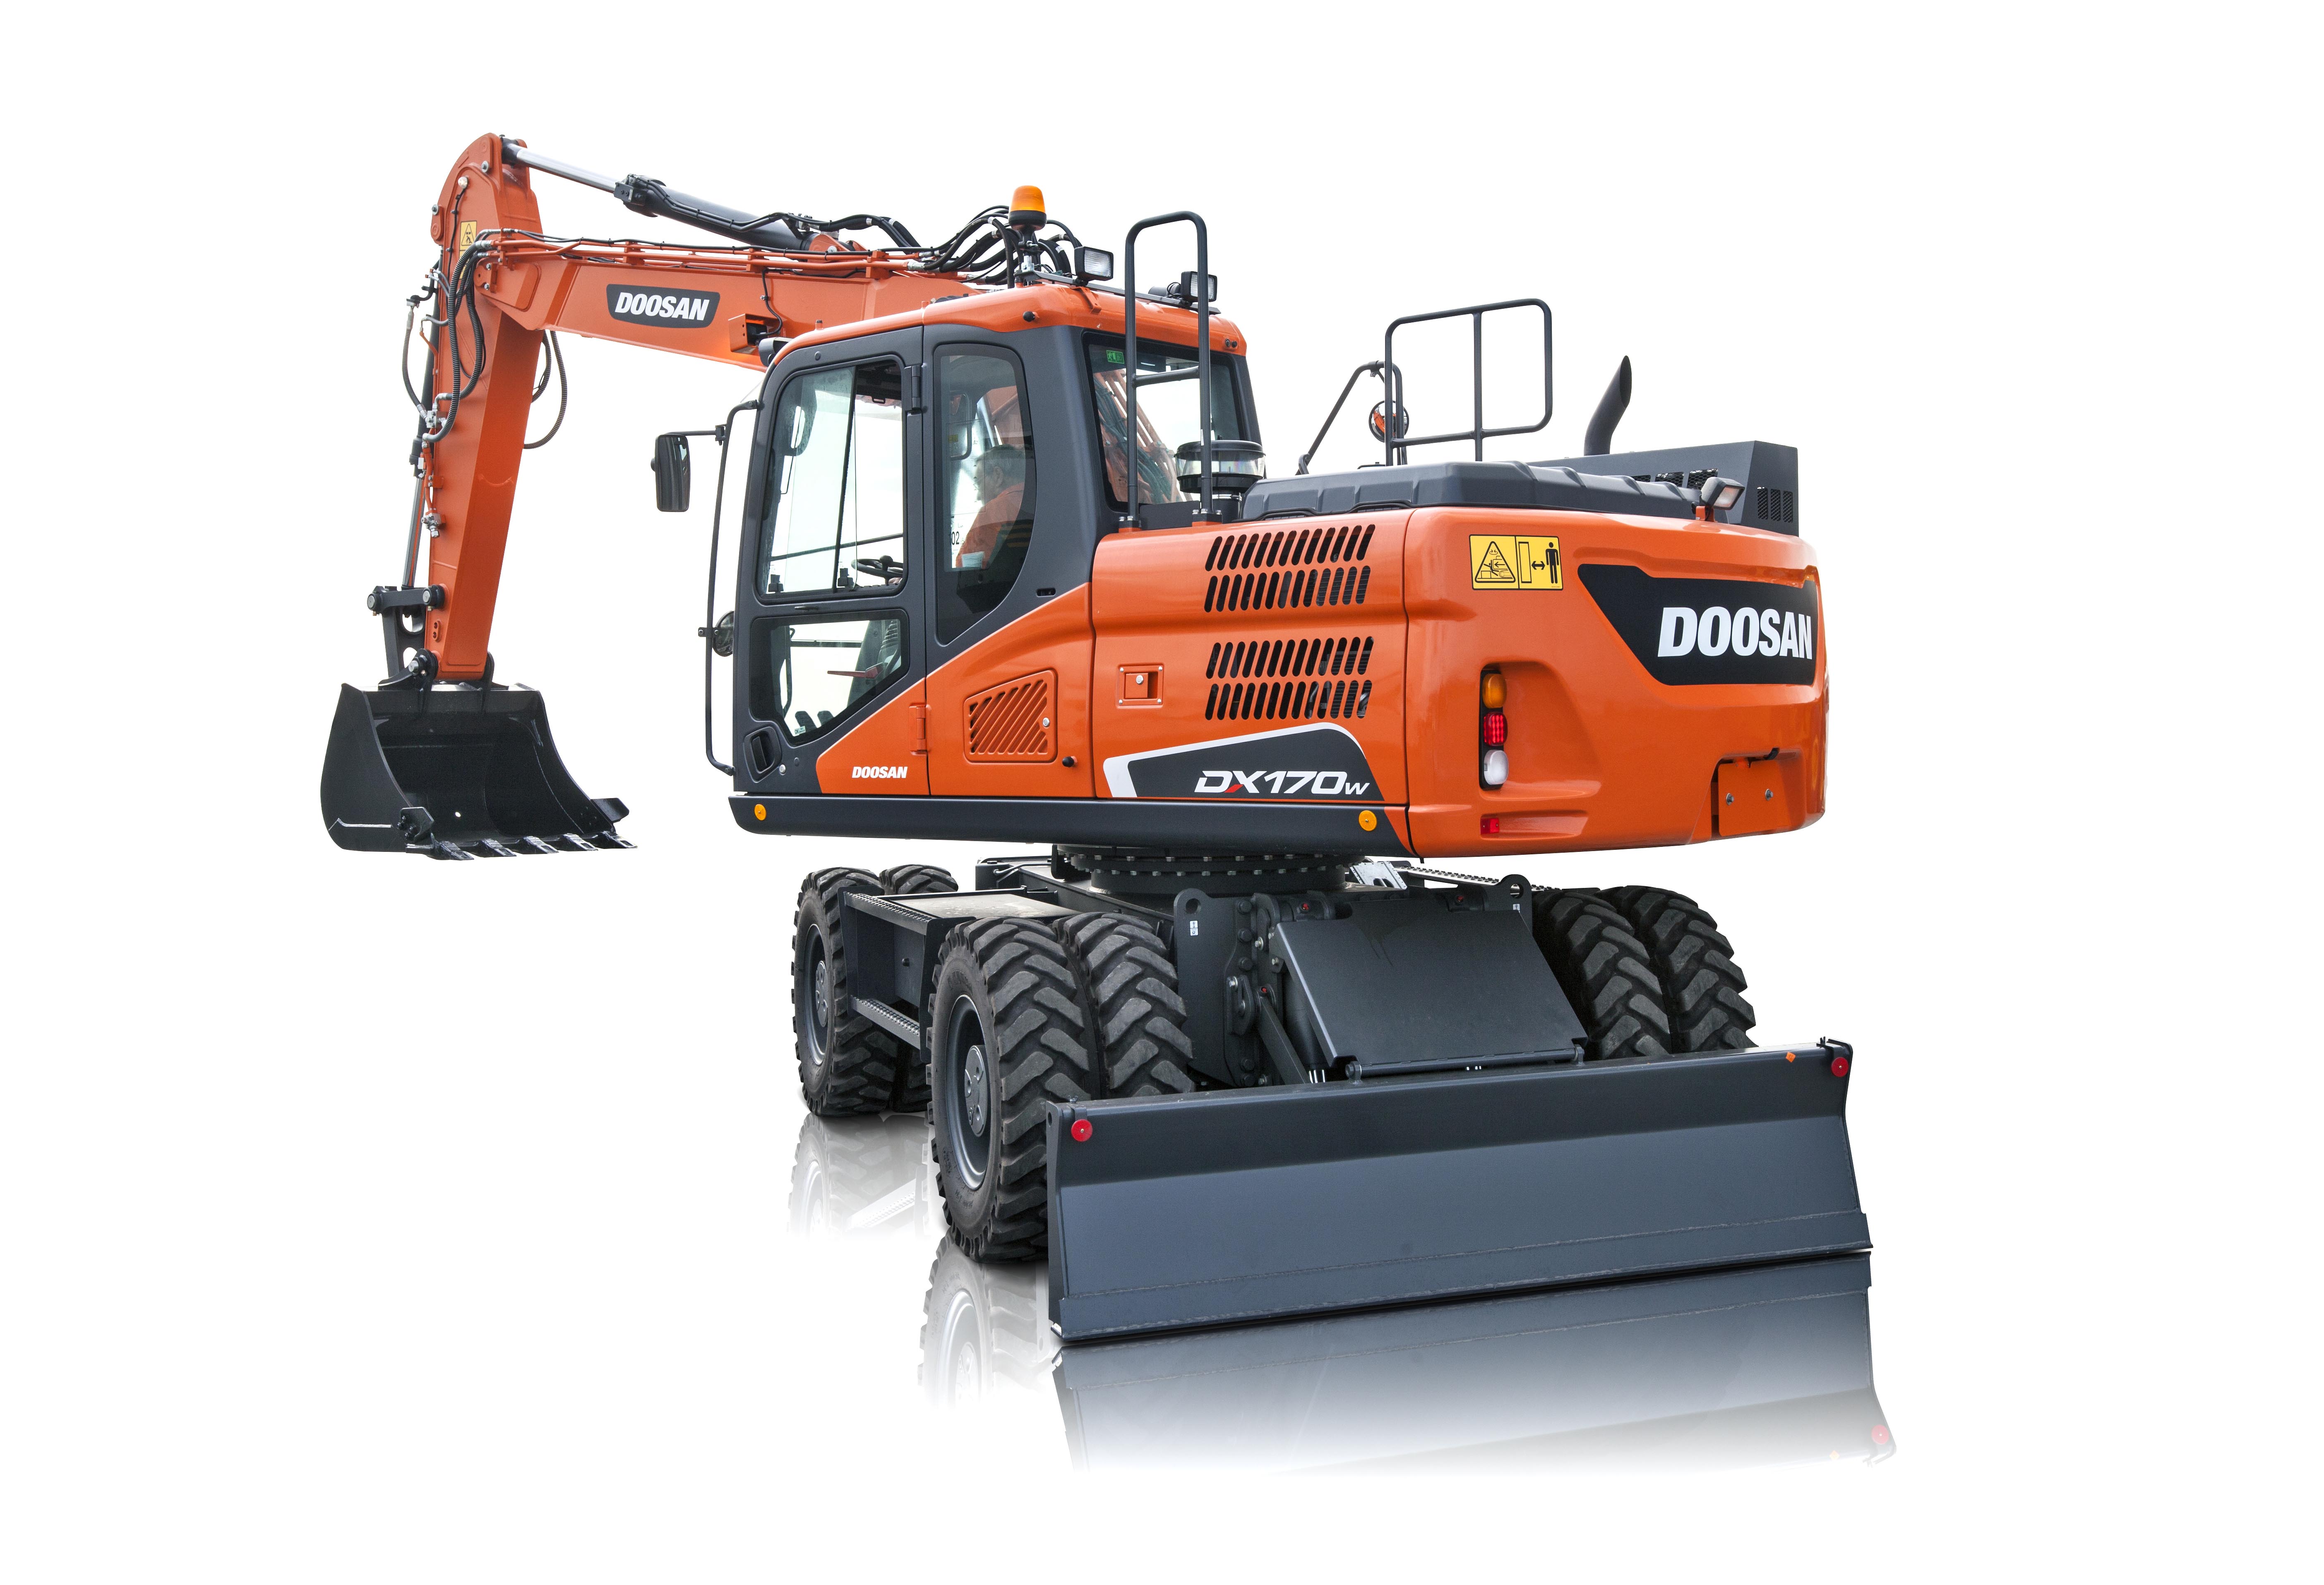 Doosan’s DX170W wheeled excavator 